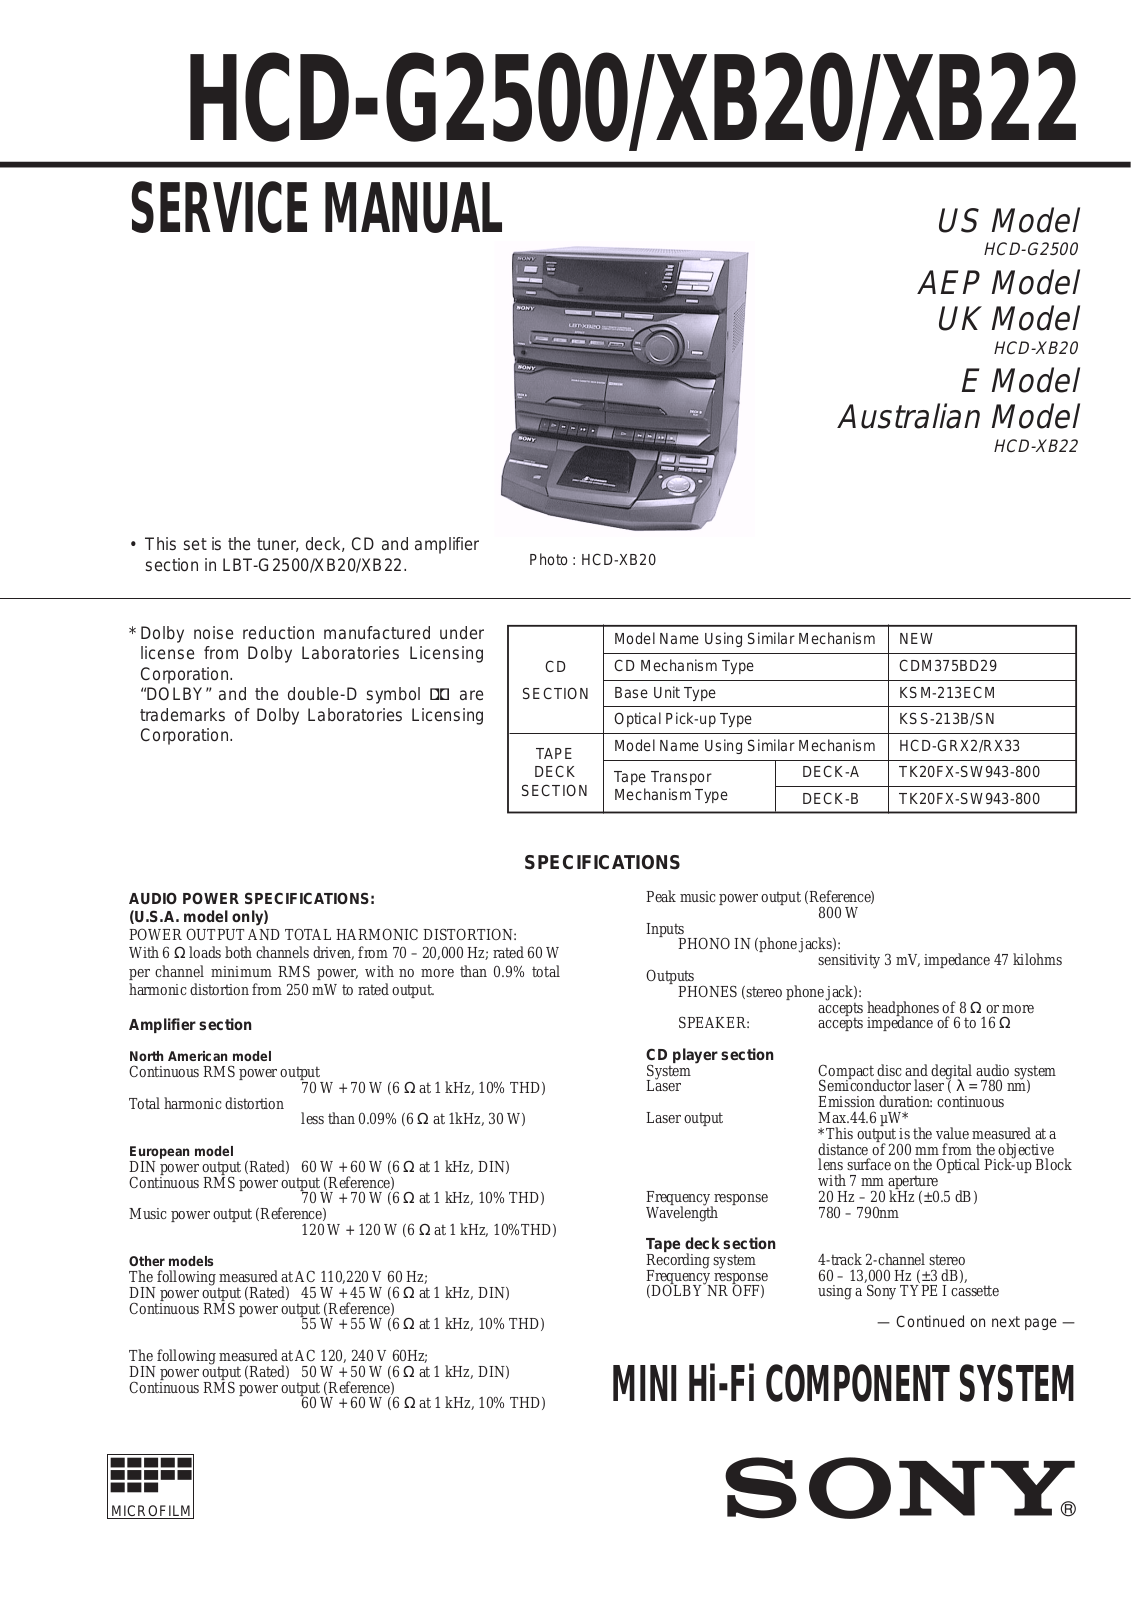 SONY HCD-G2500, HCD-XB20, HCD-XB22 Service Manual